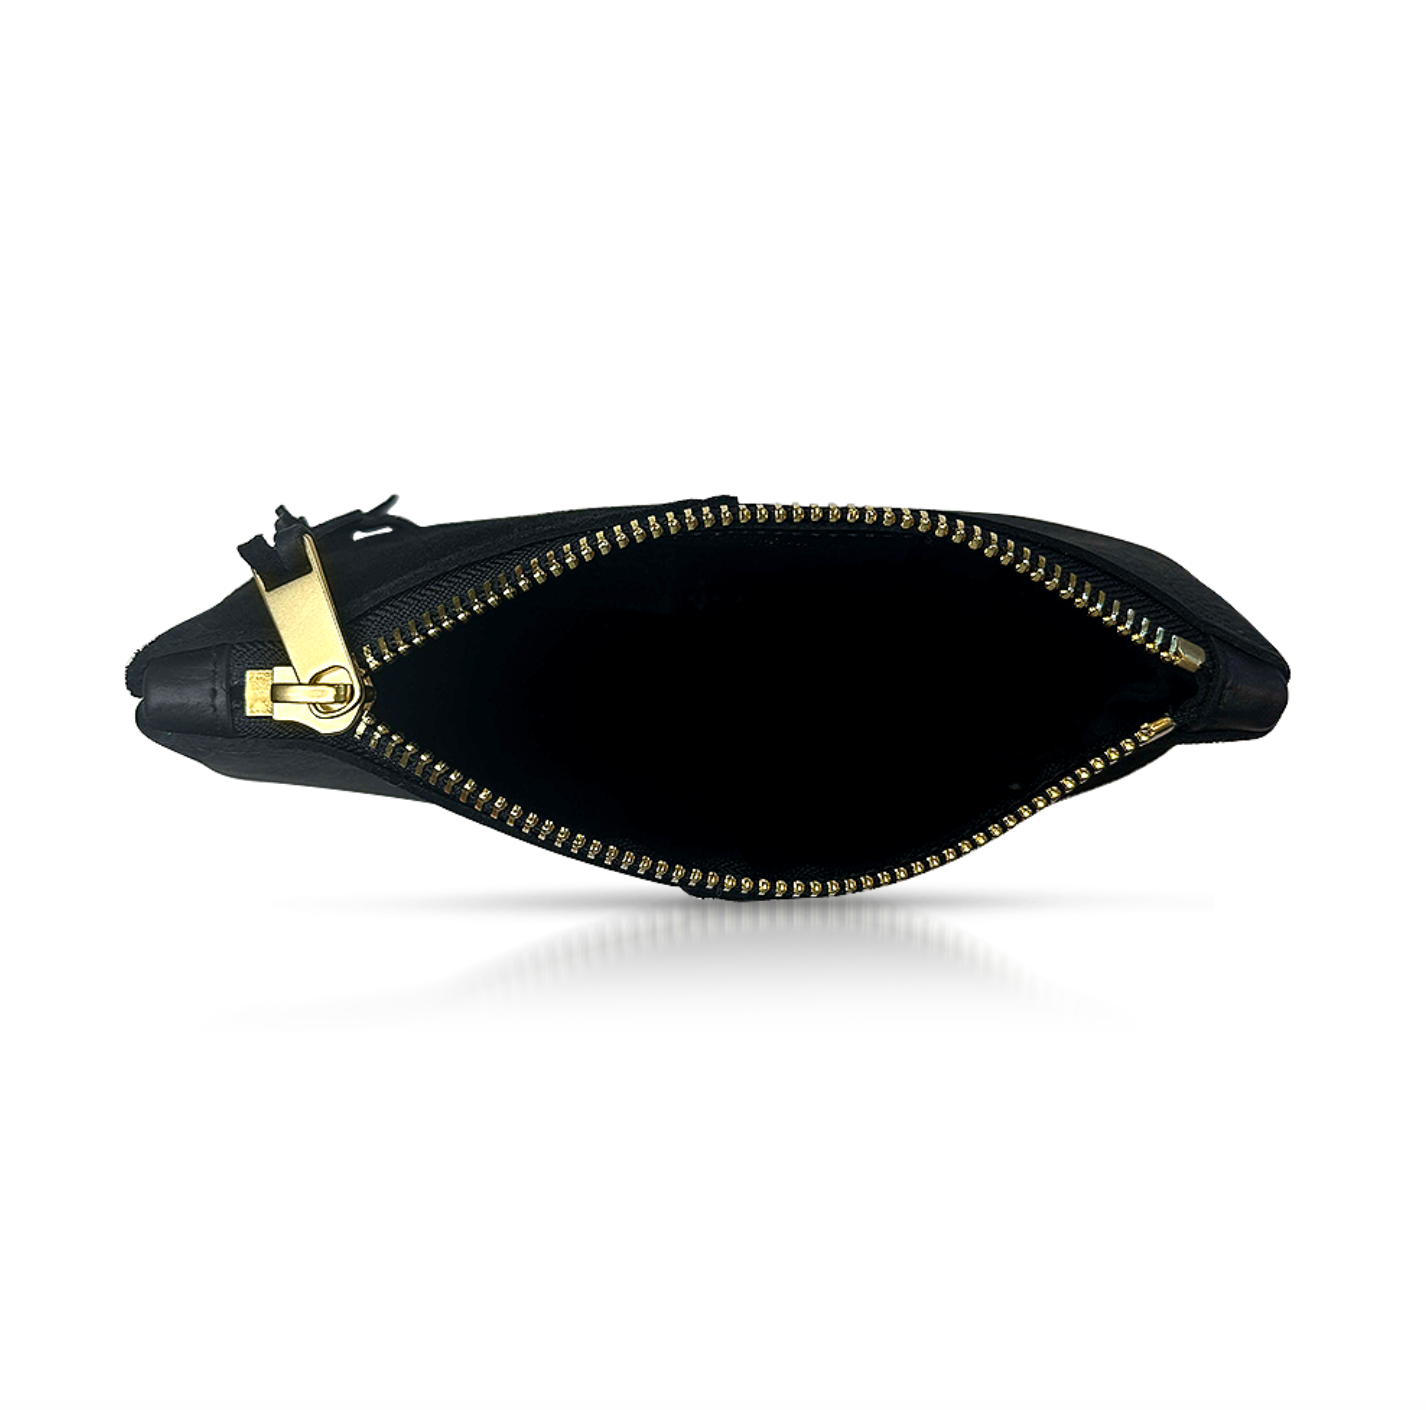 closeup of open zipper on black leather makeup bag